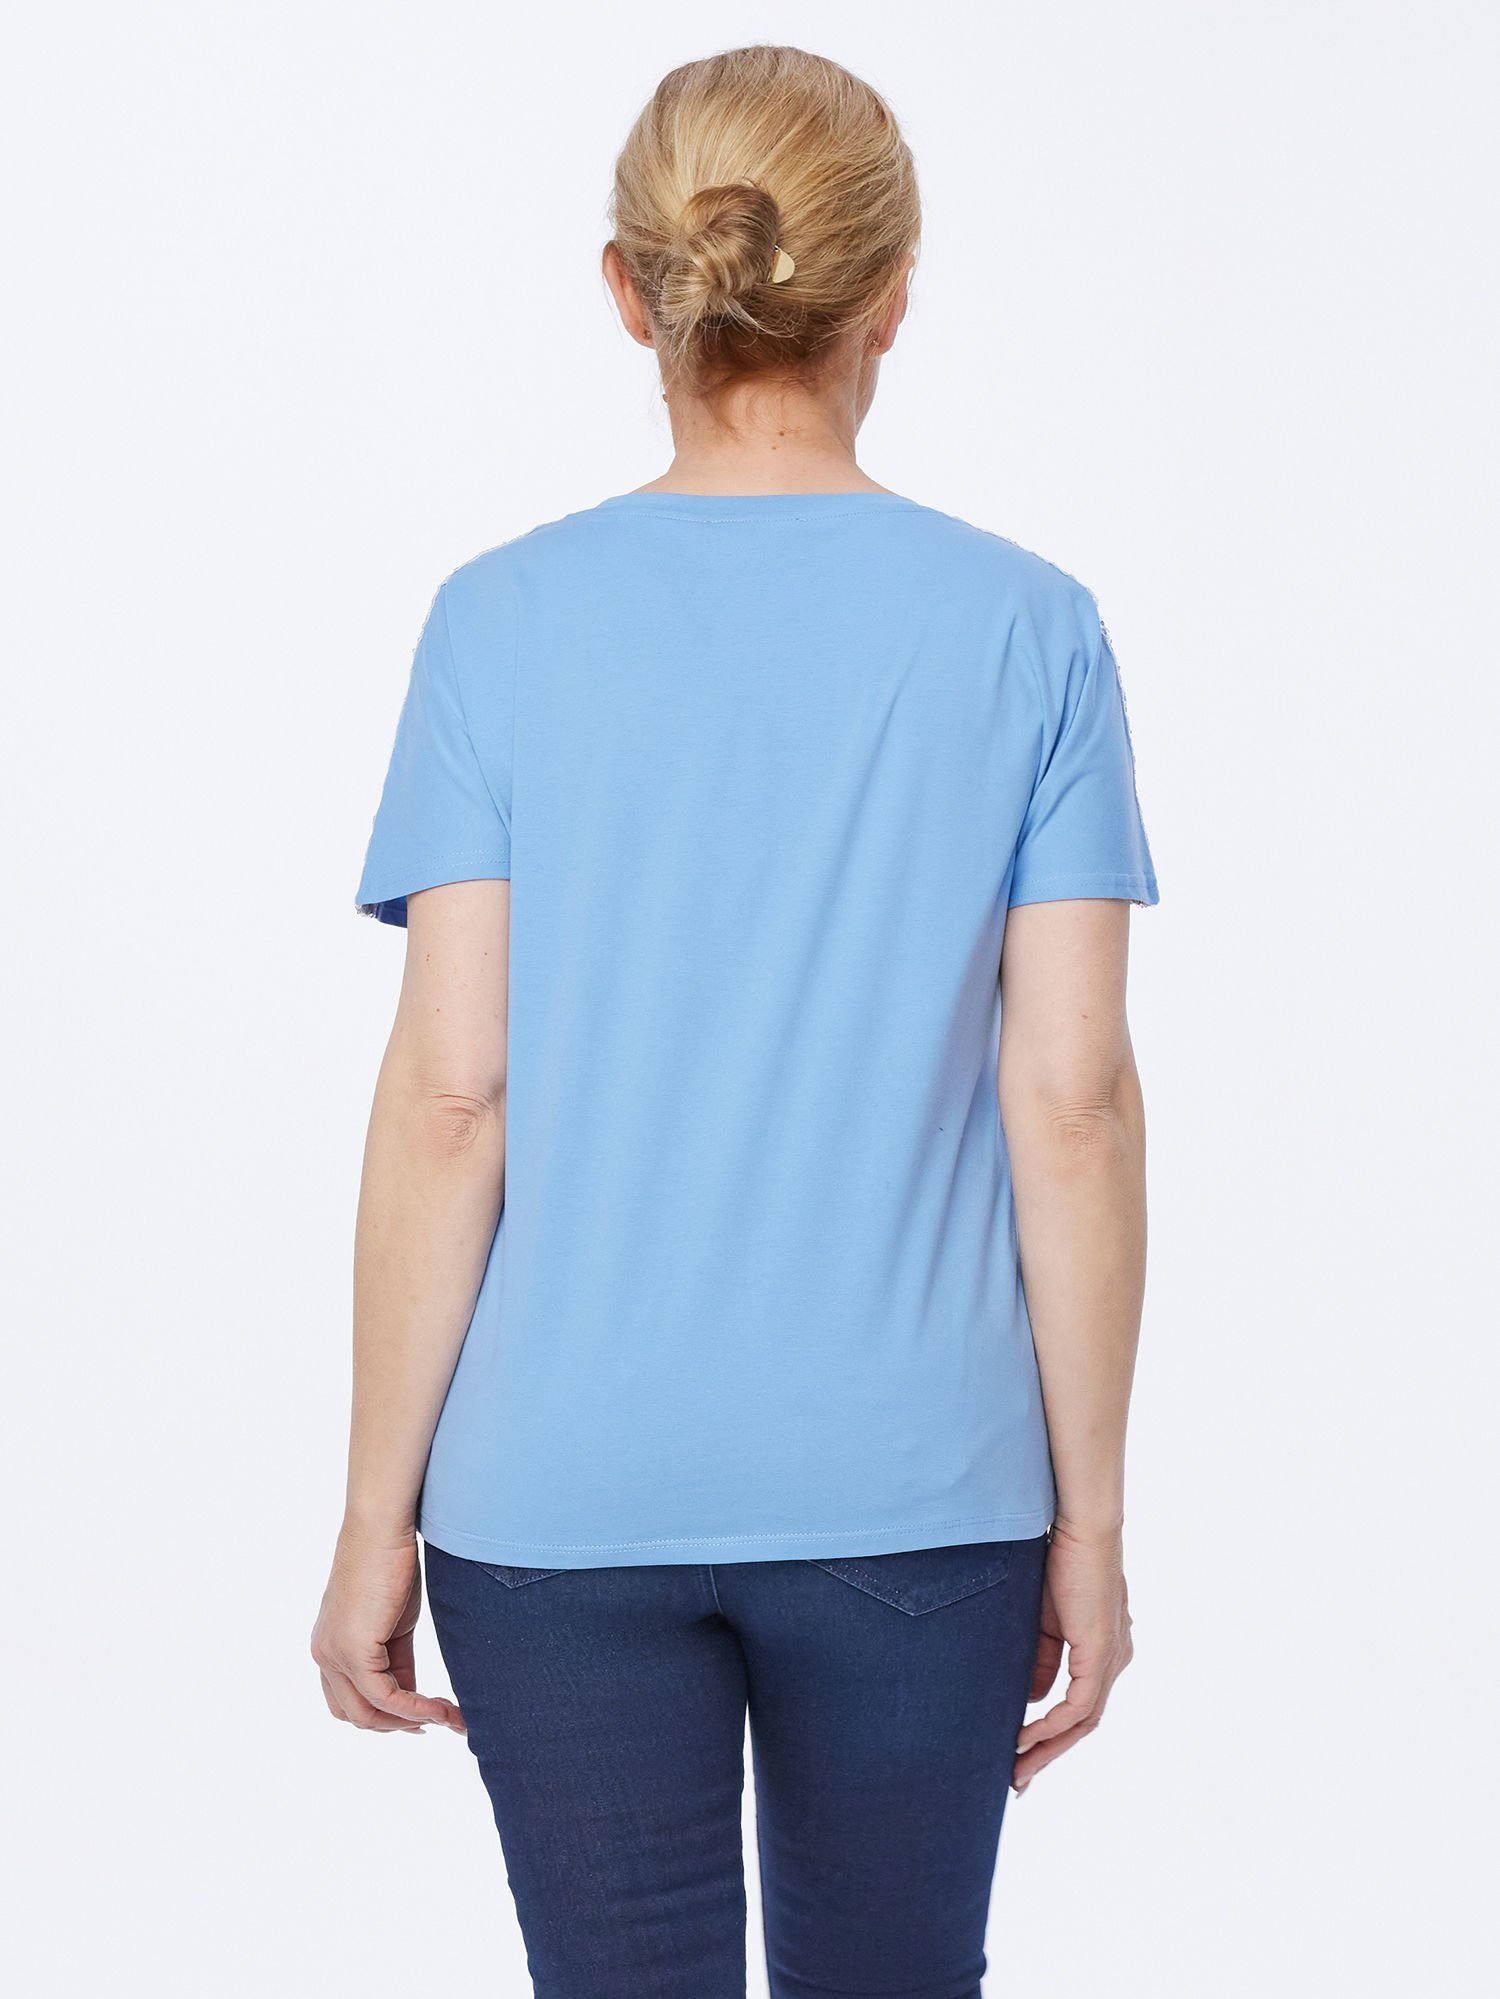 Materne blau mit Kurzarmbluse T-Shirt Christian Stern-Motiv